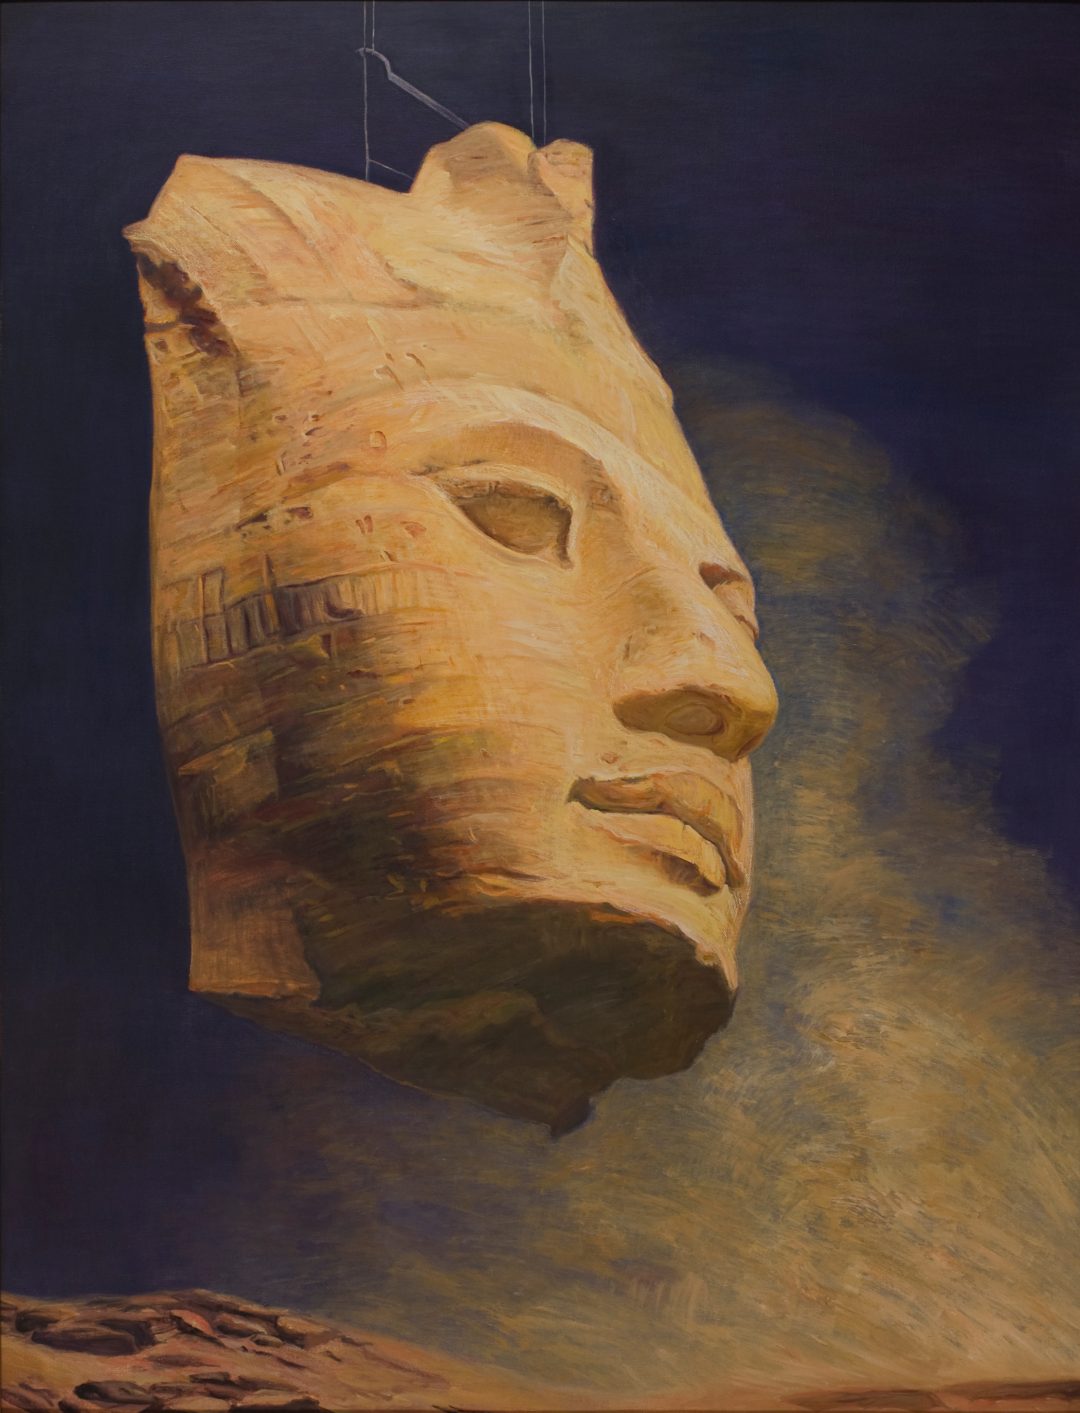 Abu Simbel II